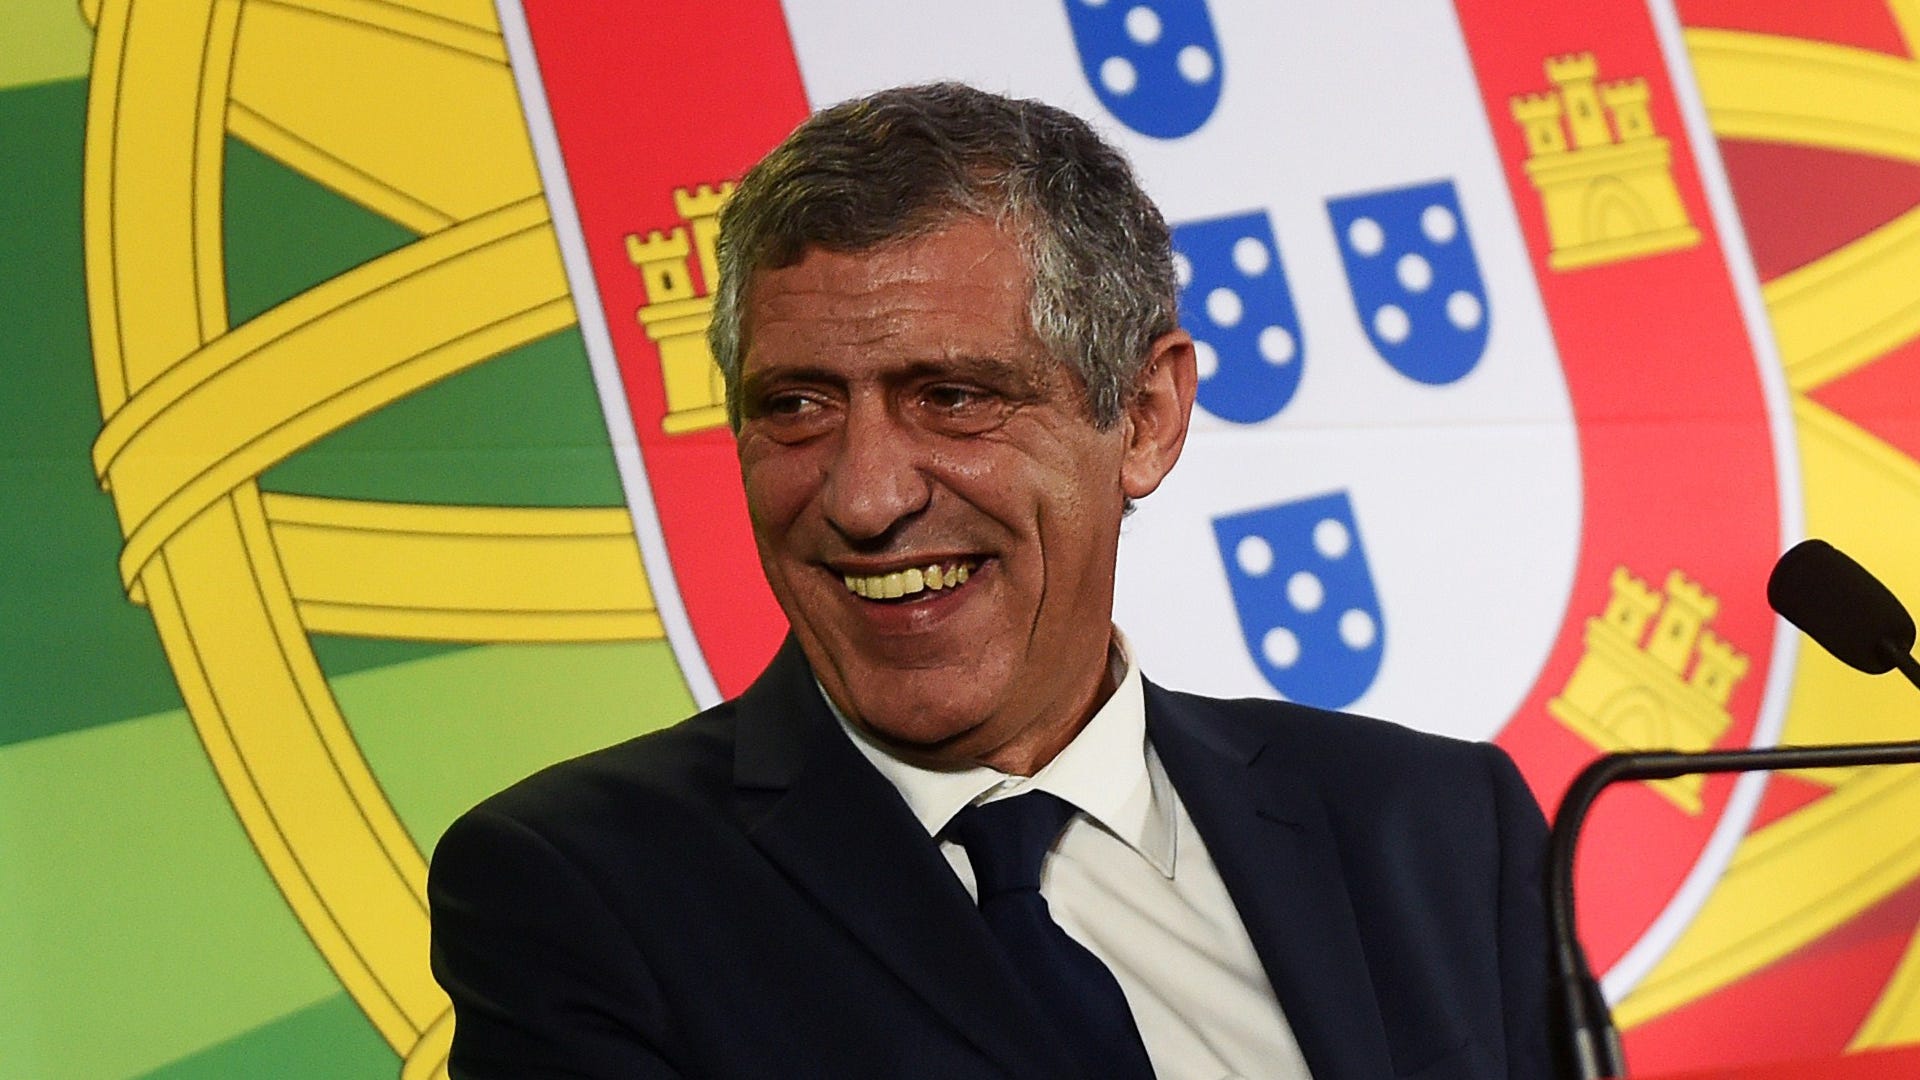 Santos targeting Euro 2016 glory for Portugal | Goal.com English Oman